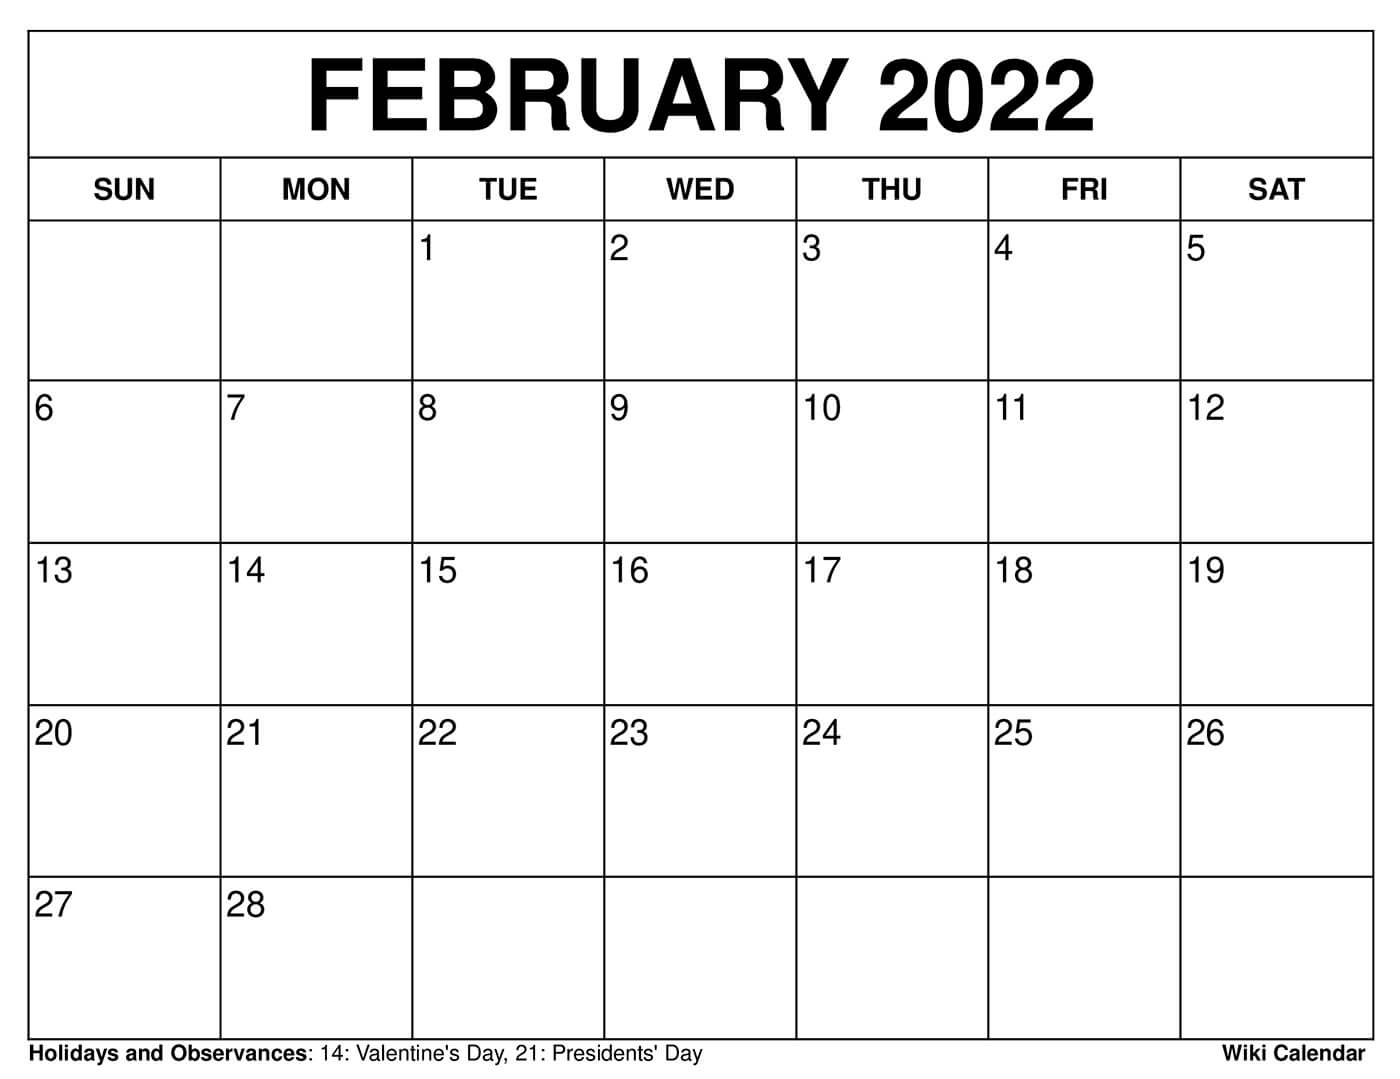 February 2022 Free Printable Calendar Free Printable February 2022 Calendars - Wiki Calendar